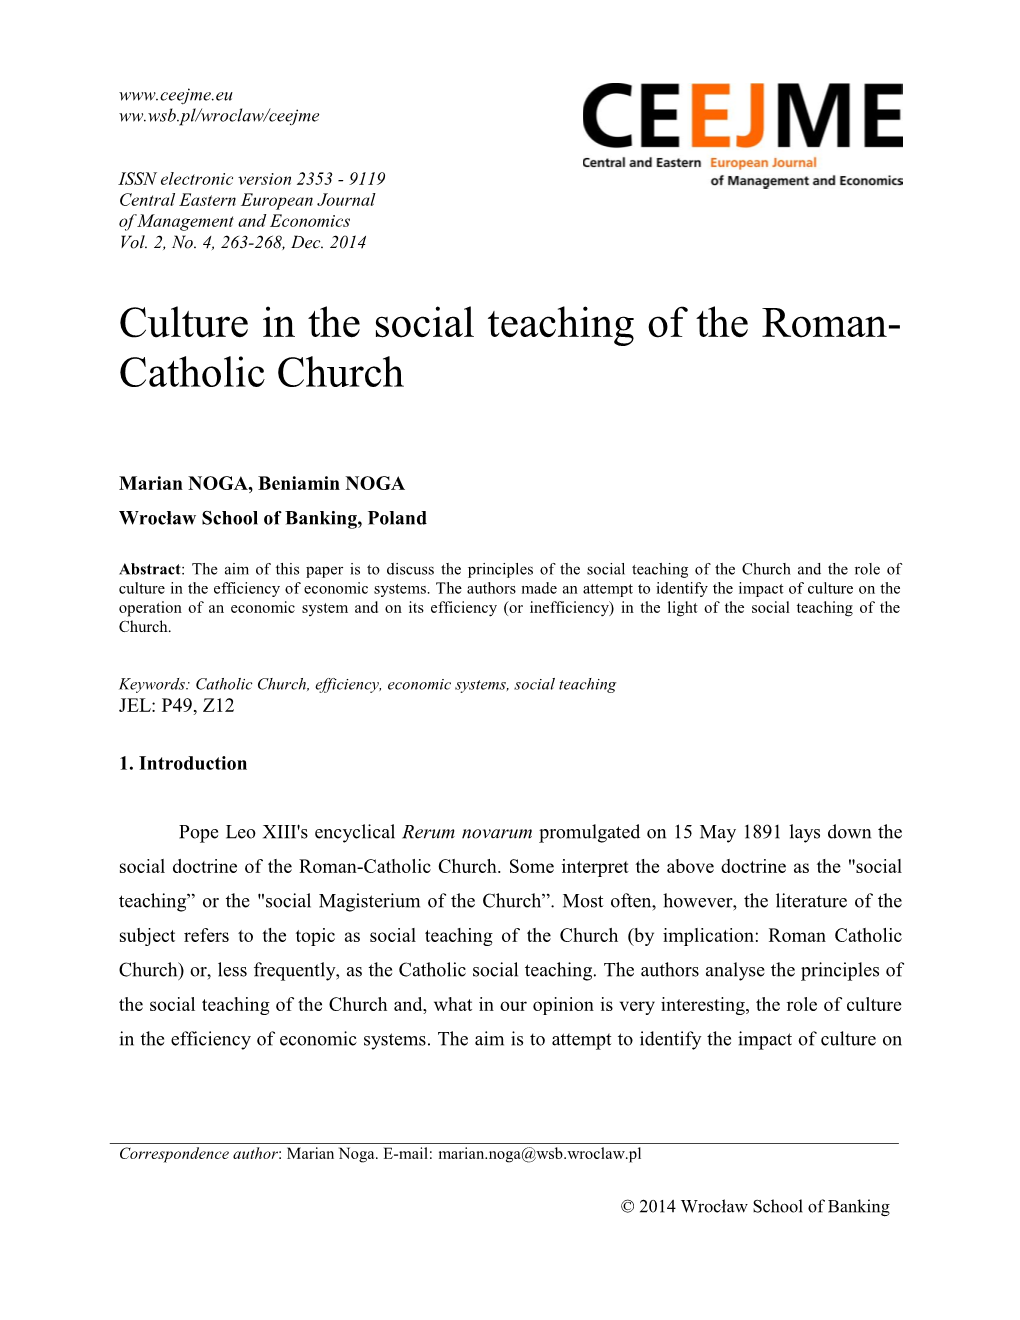 Culture in the Social Teaching of the Roman-Catholic Church